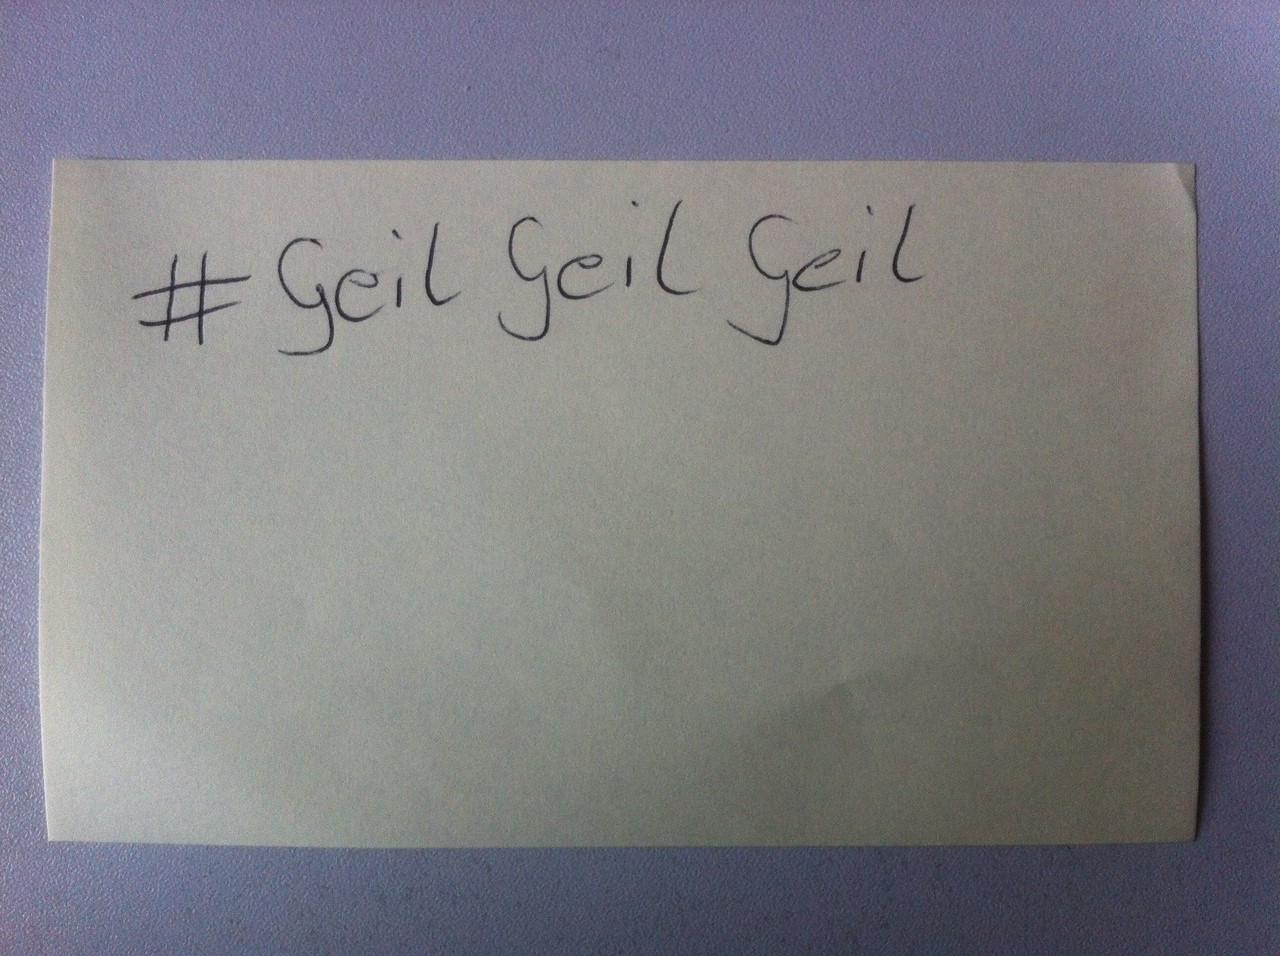 # Geil. Geil. Geil.